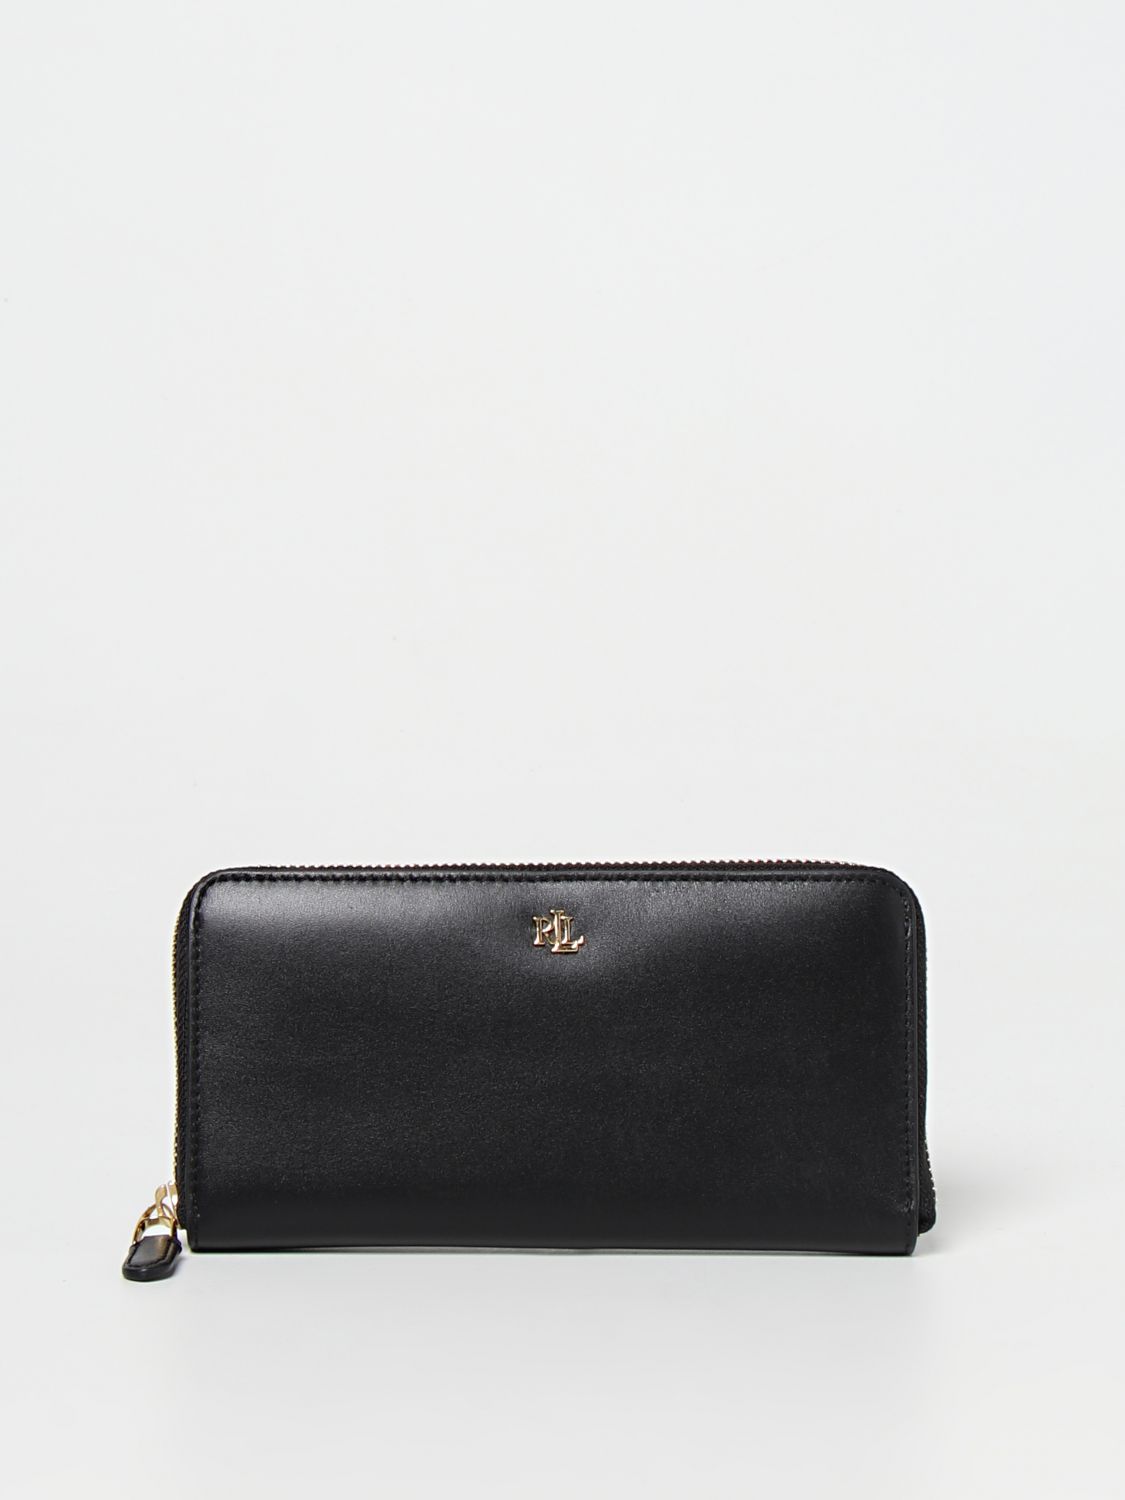 POLO RALPH LAUREN: wallet for woman - Black | Polo Ralph Lauren wallet  432876730 online on 